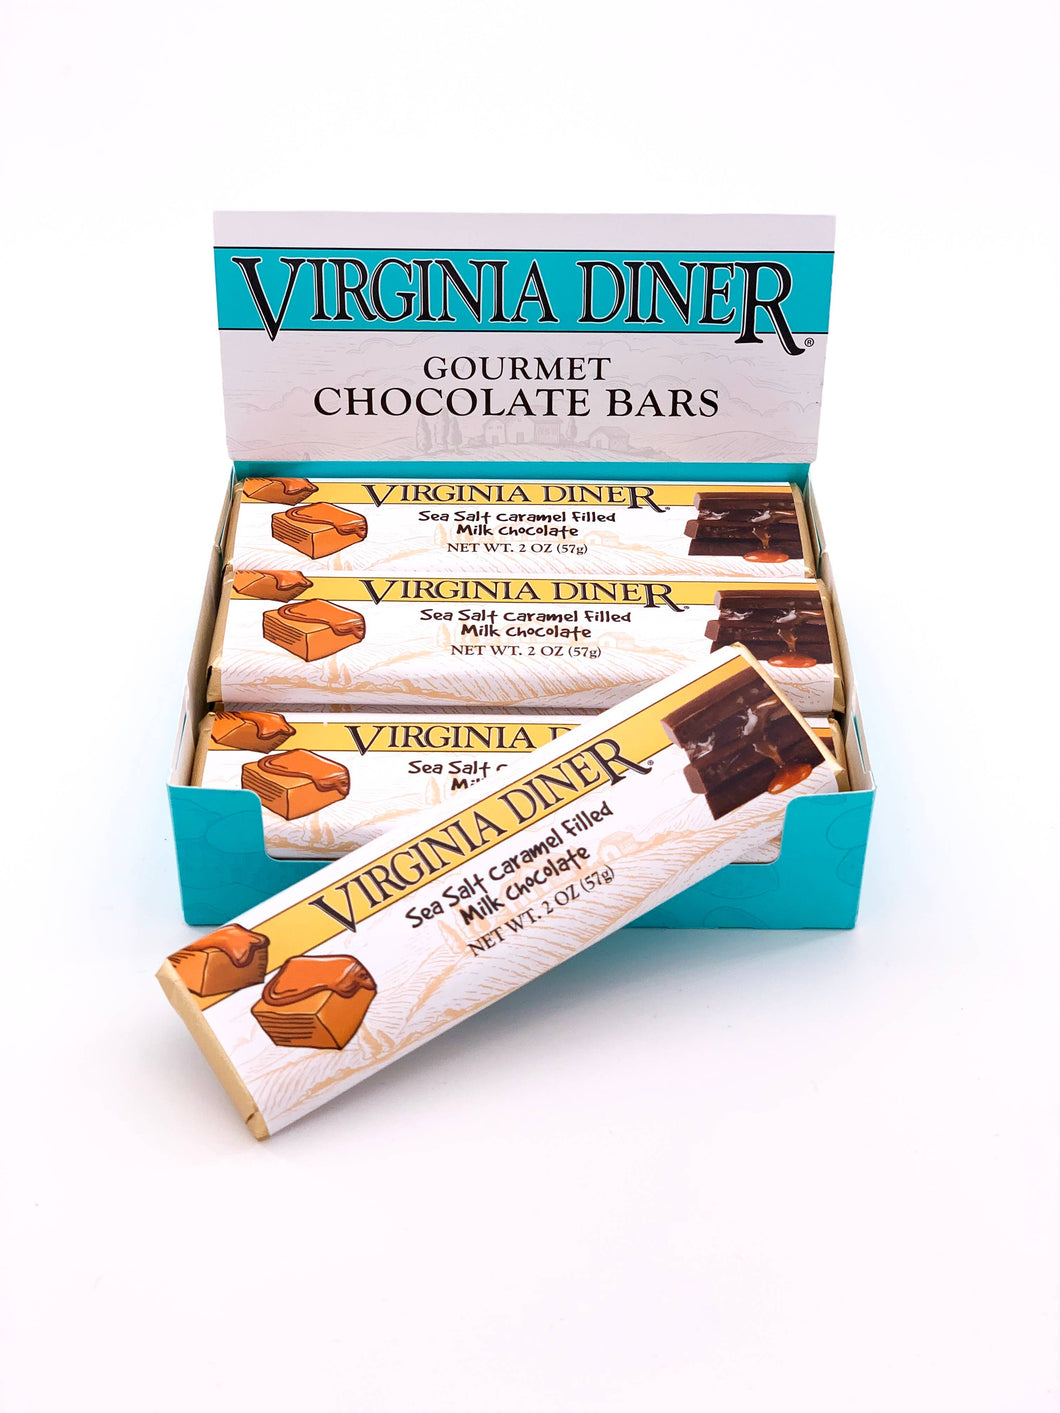 Virginia Diner, Inc. - Chocolate Bars - Sea Salt Caramel, Milk Chocolate